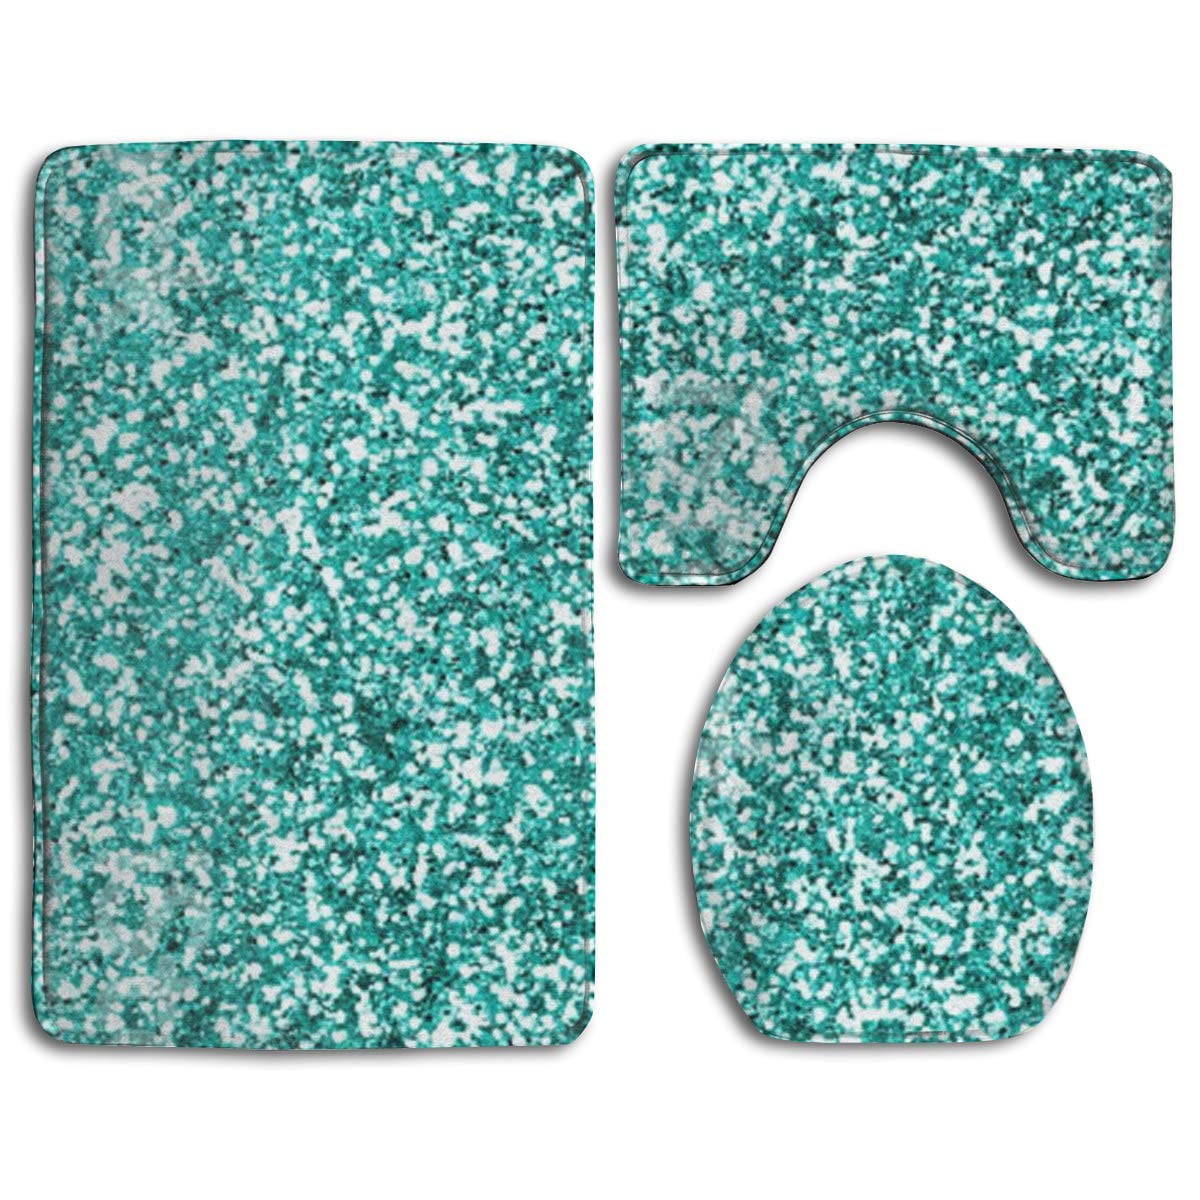 CHAPLLE Turquoise Glitter 3 Piece Bathroom Rugs Set Bath ...